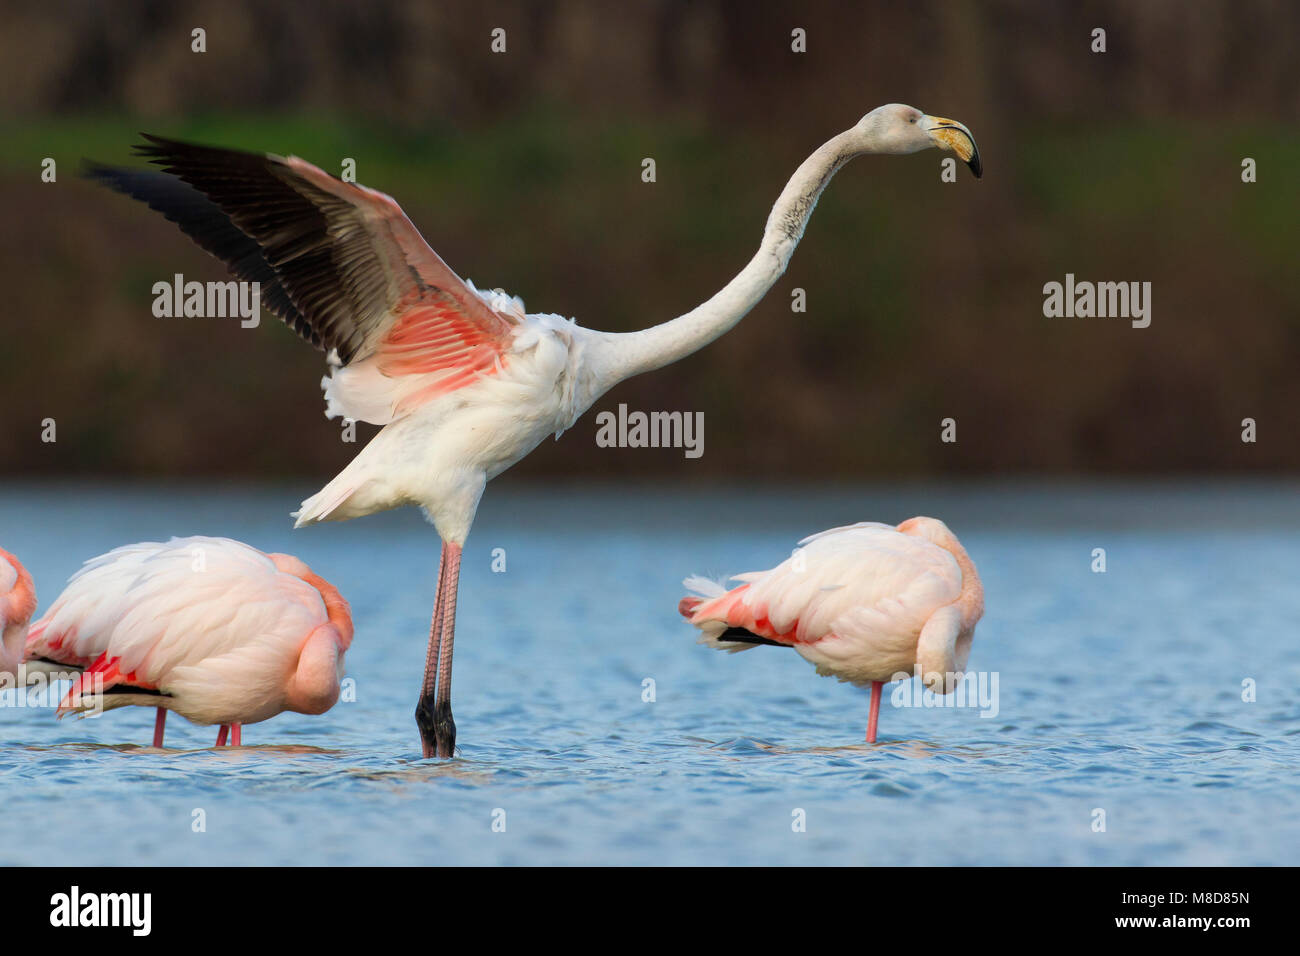 Flamingo ; flamant rose Banque D'Images